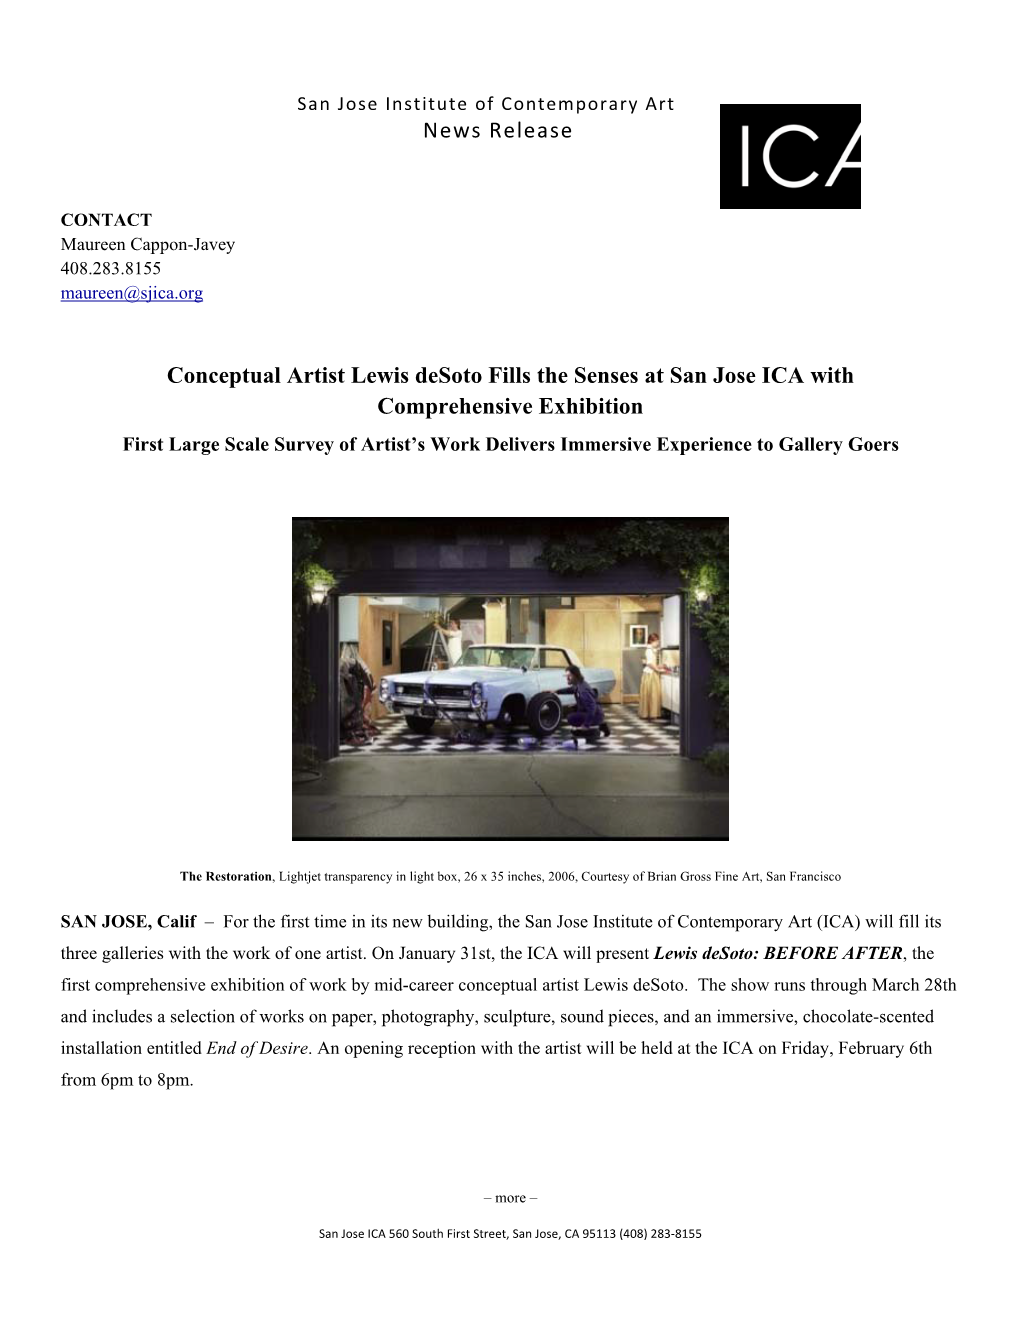 News Release Conceptual Artist Lewis Desoto Fills the Senses at San Jose ICA with Comprehensive Exhibition